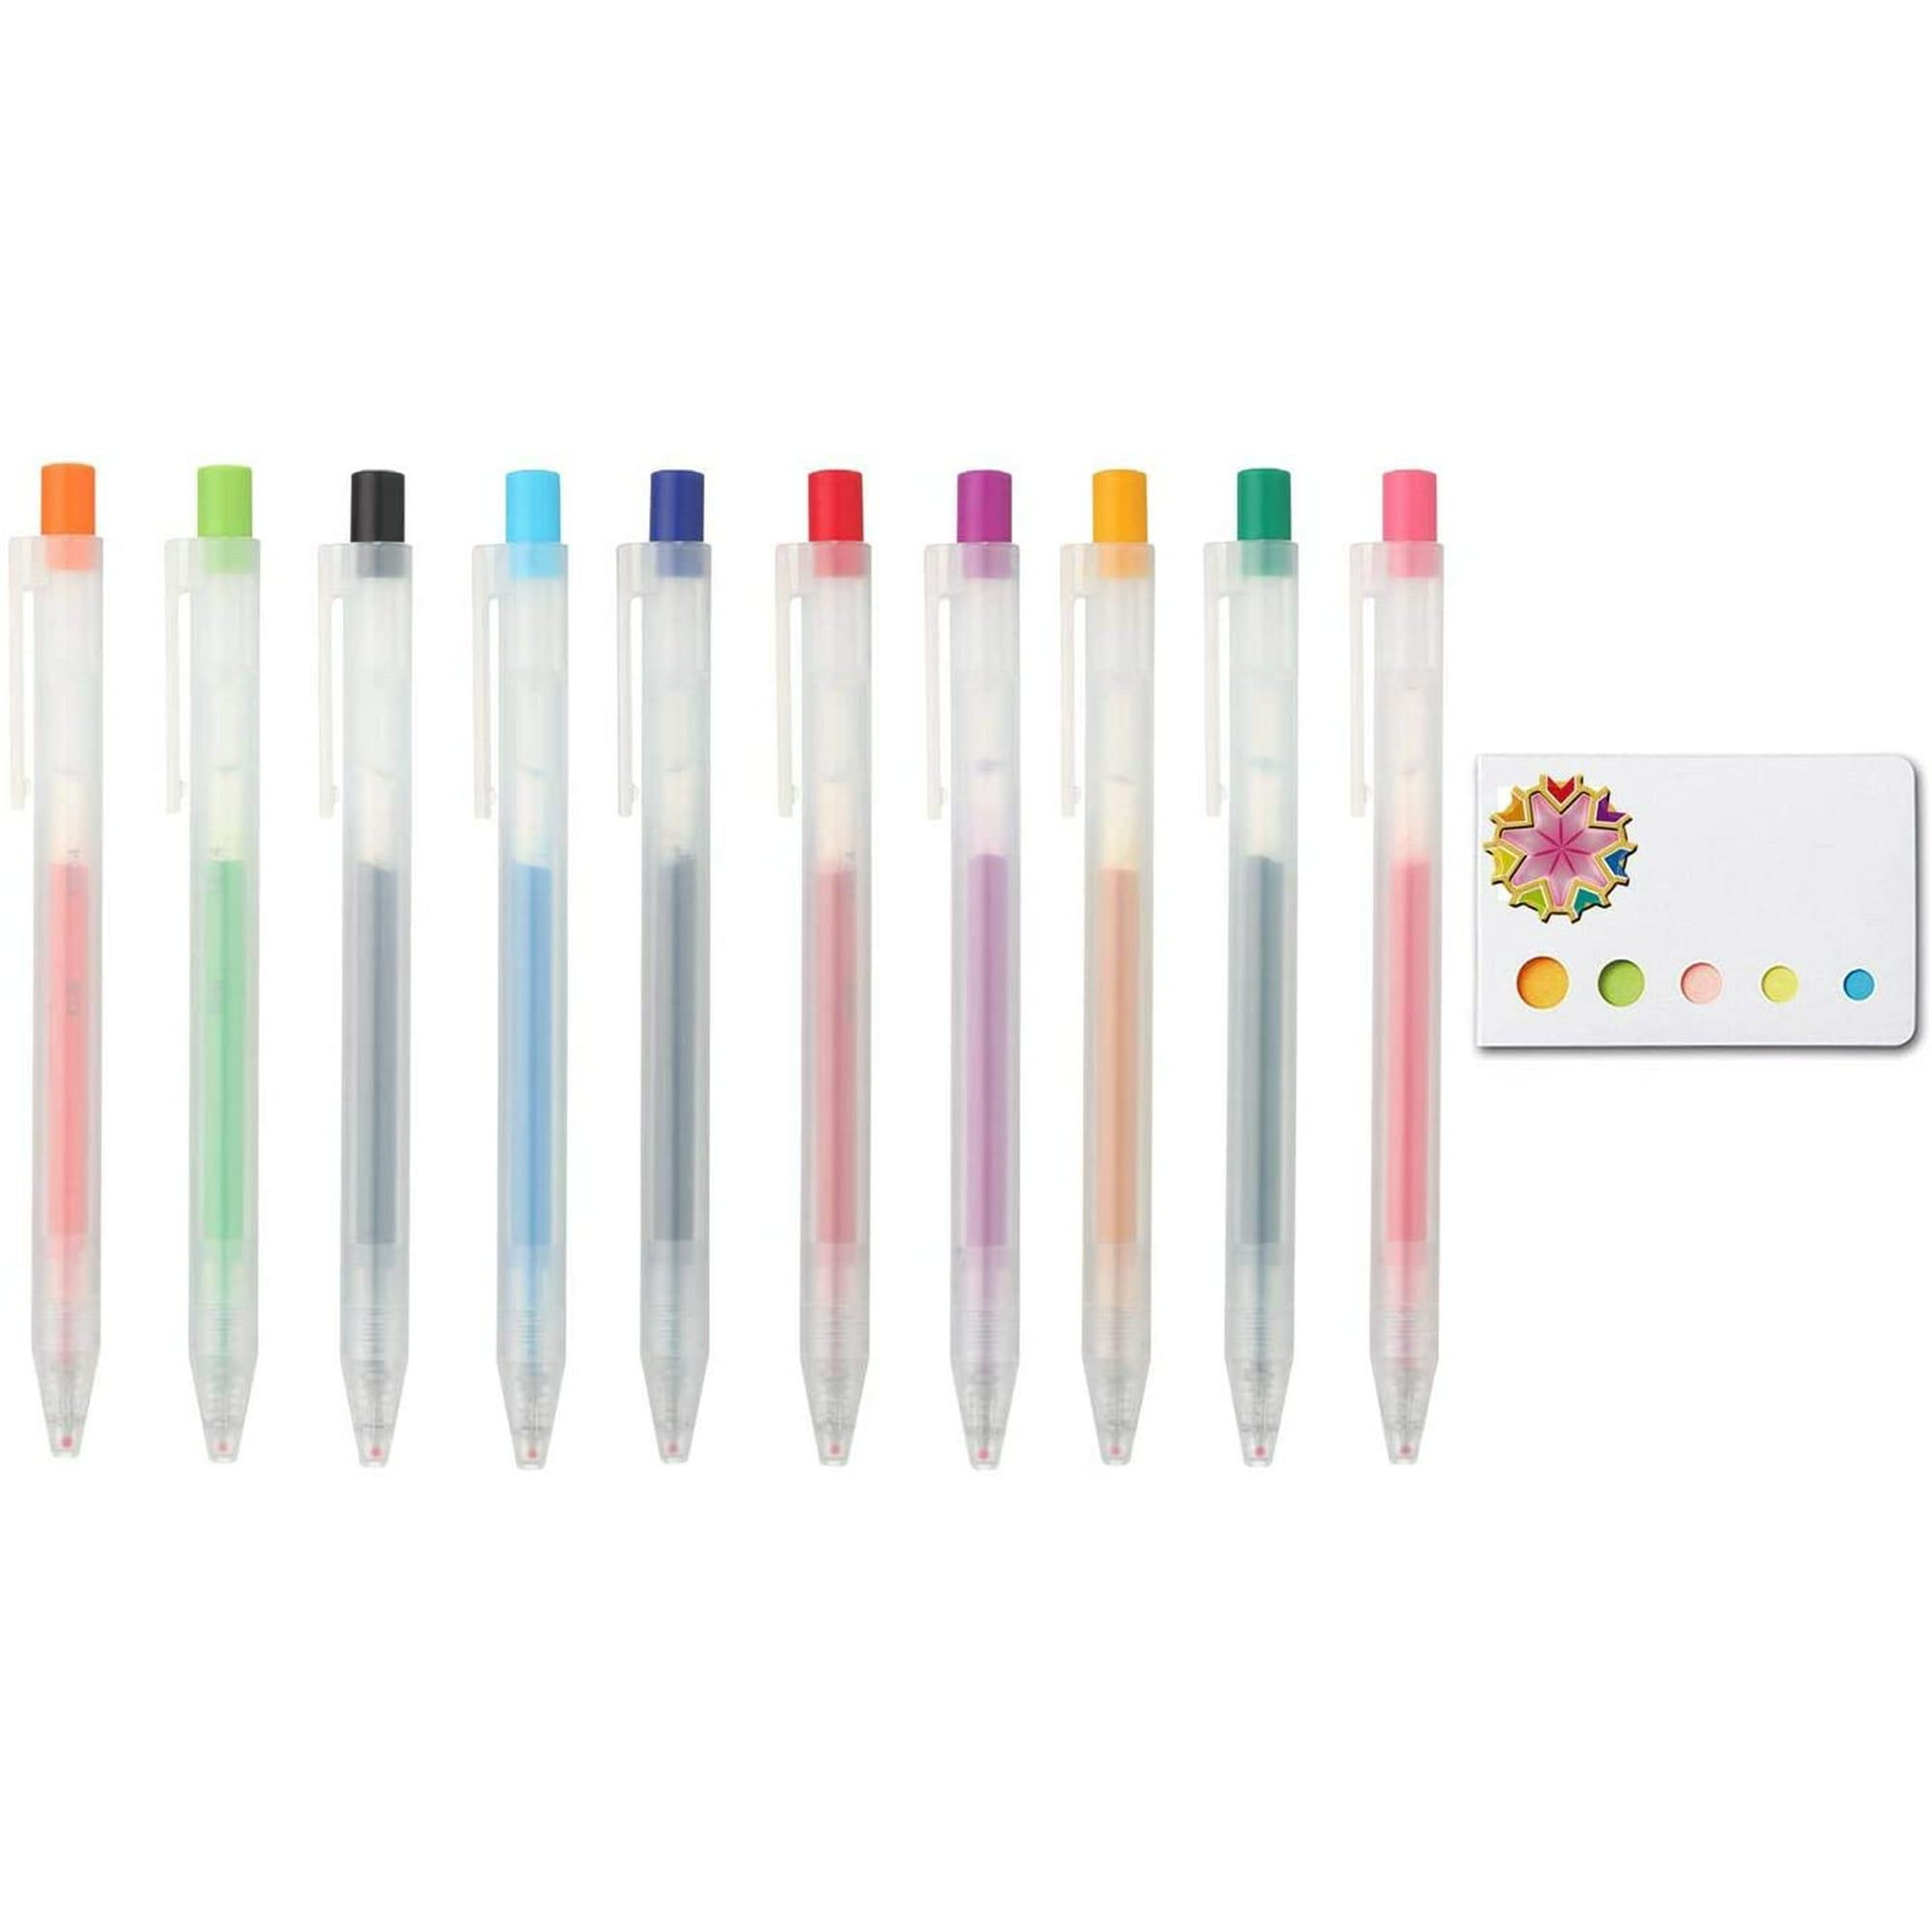 Muji Smooth Writing Gel Ink Ballpoint Pen 10colors Set(0.5mm,Knock 